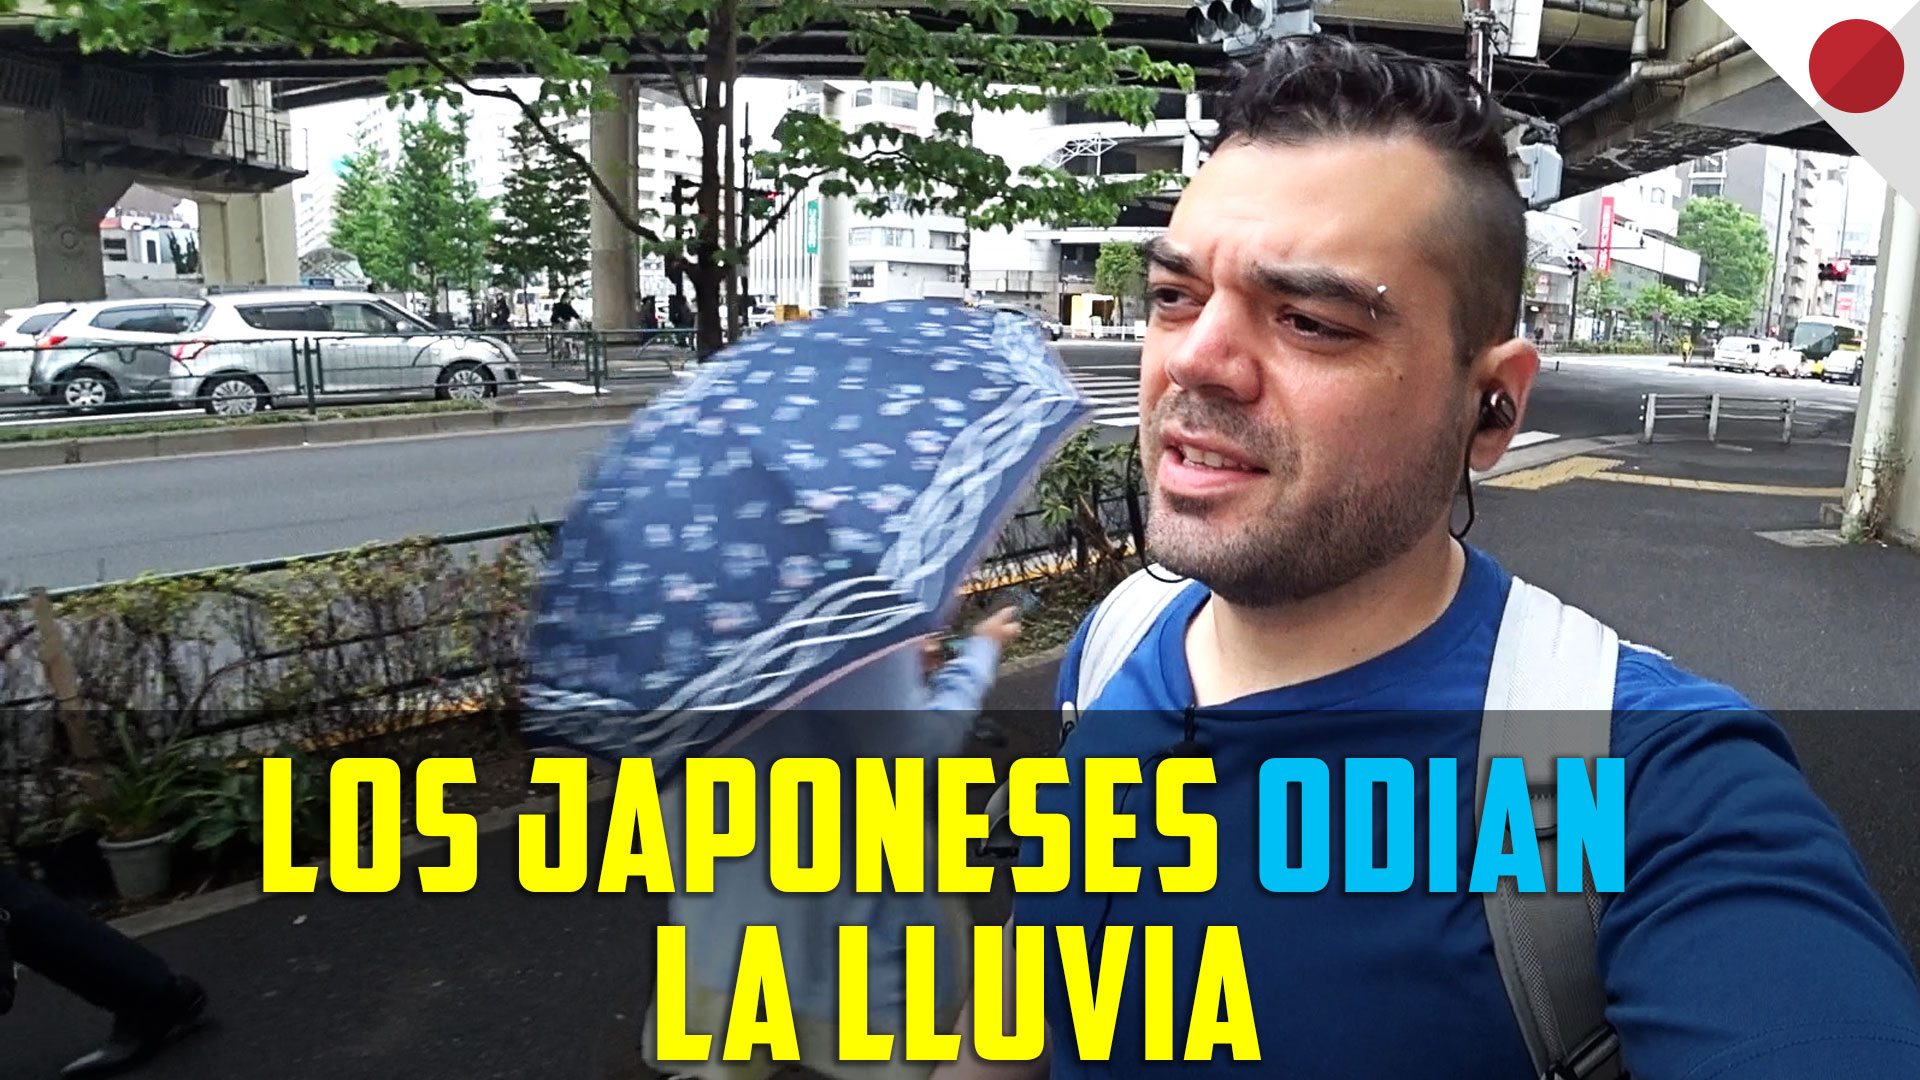 Los japoneses odian la lluvia